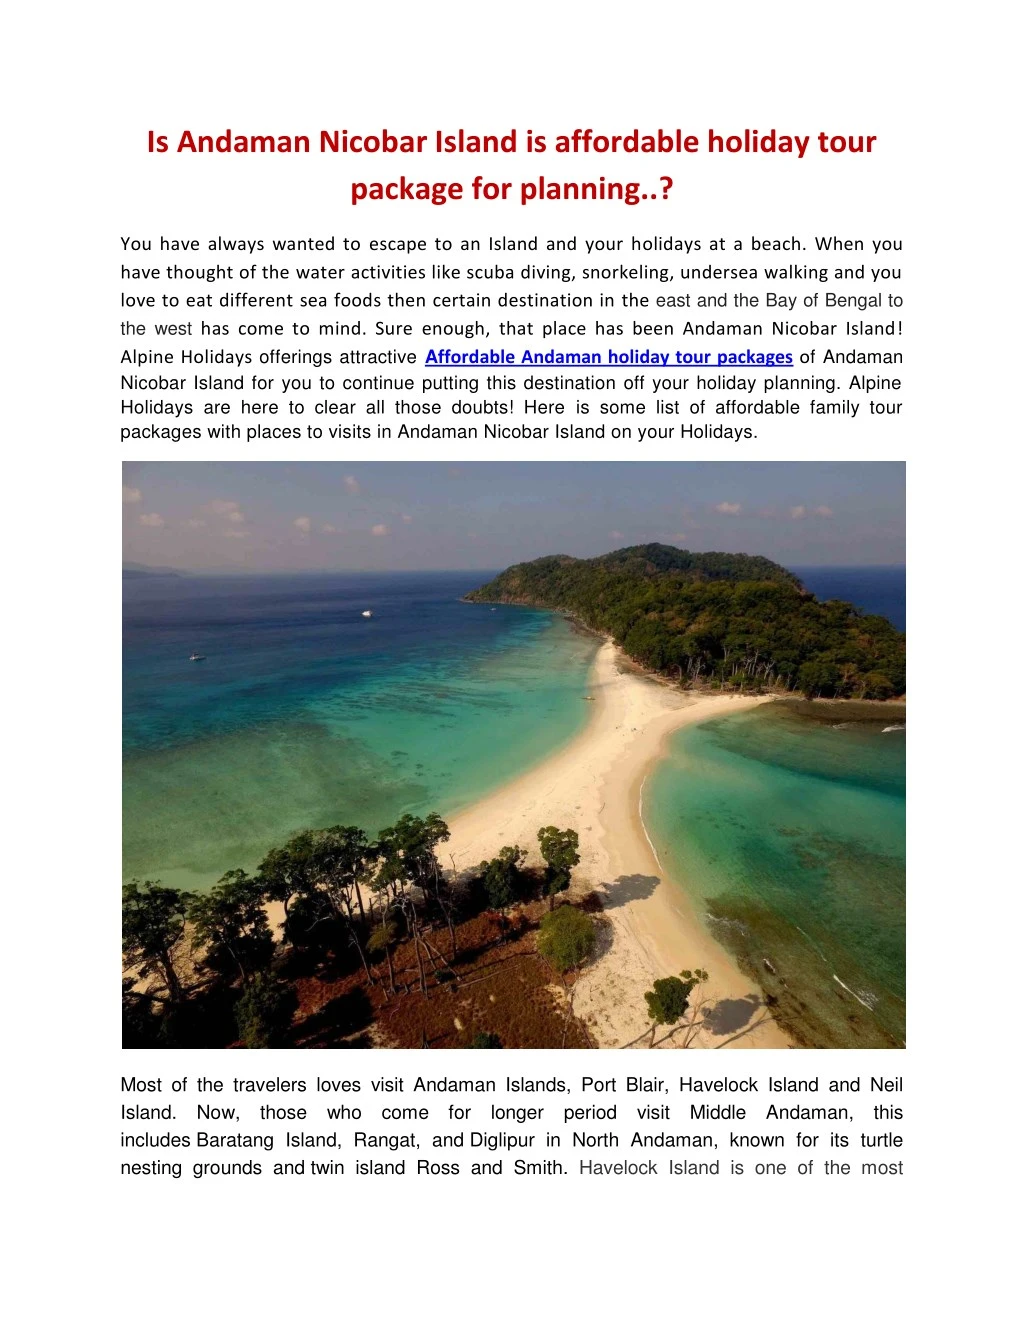 is andaman nicobar island is affordable holiday